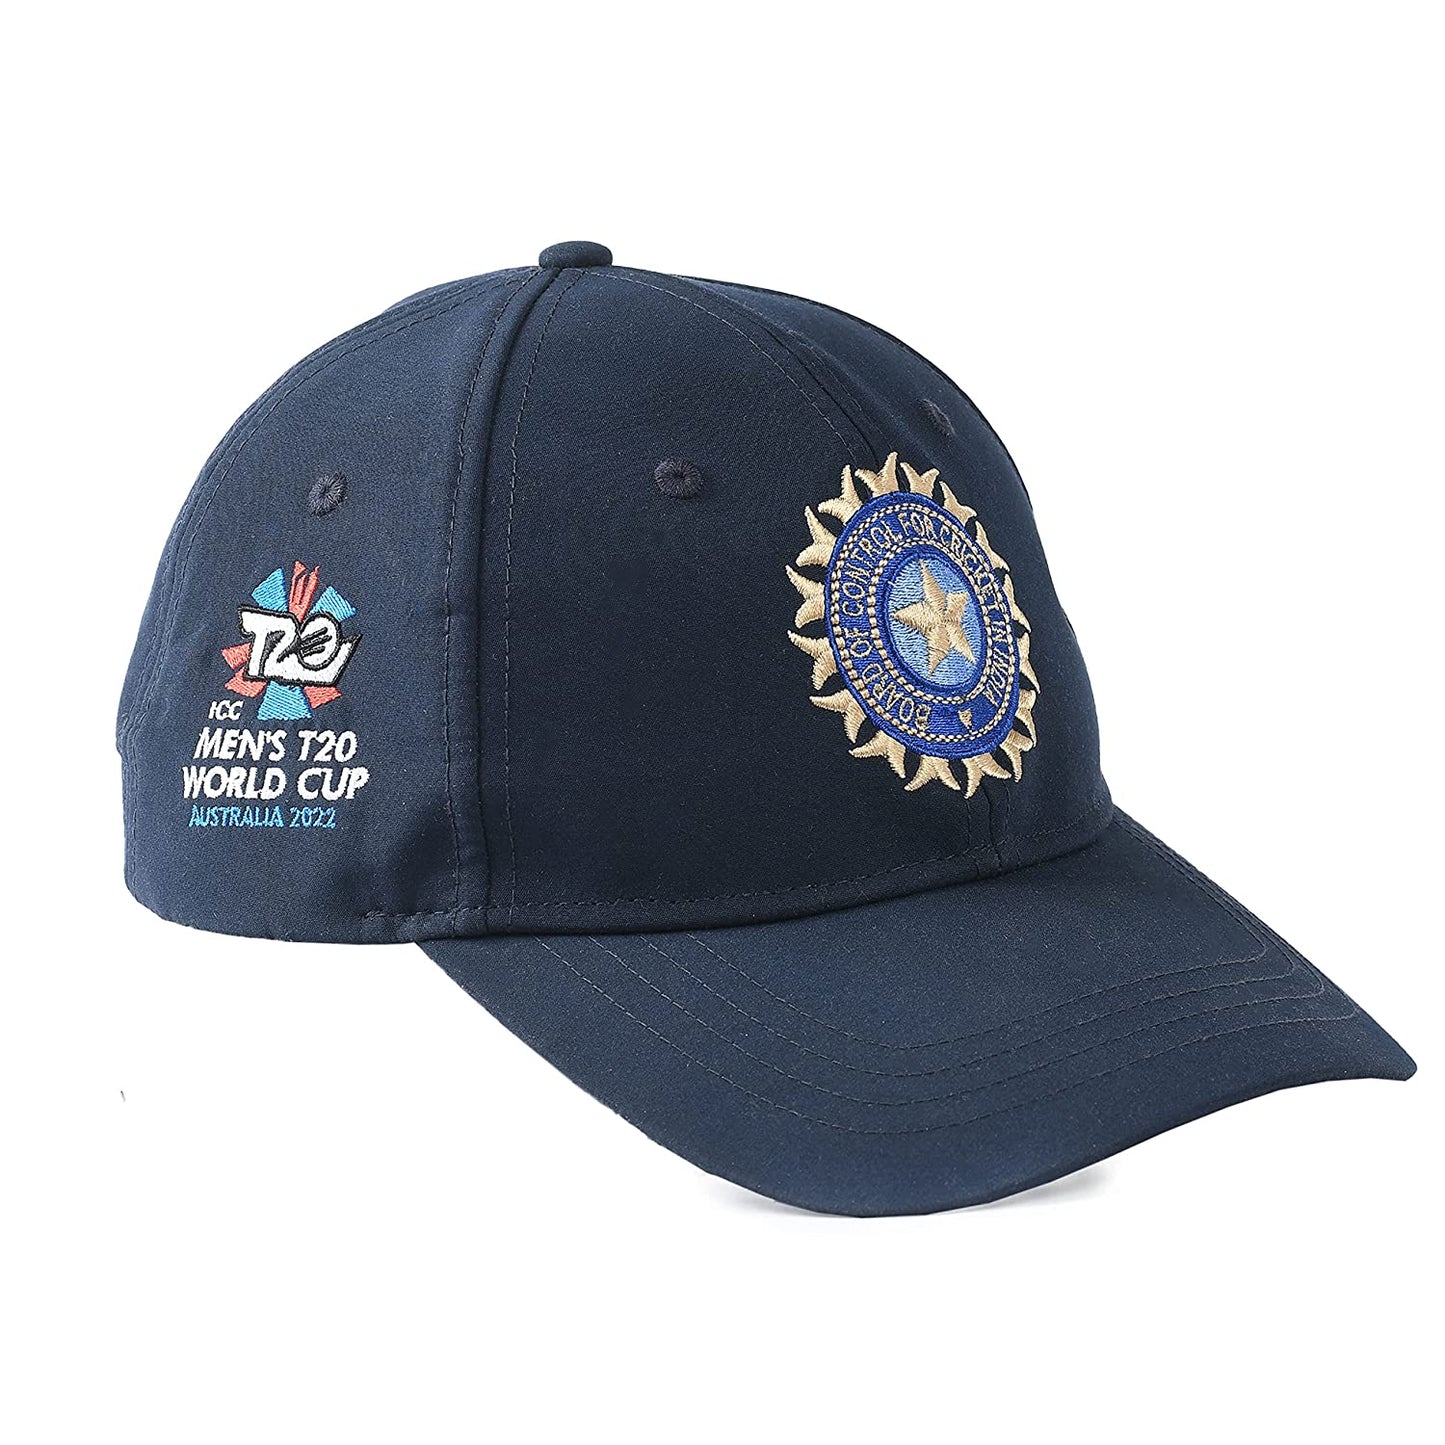 Playr ICC Classic Cap, Navy - Best Price online Prokicksports.com